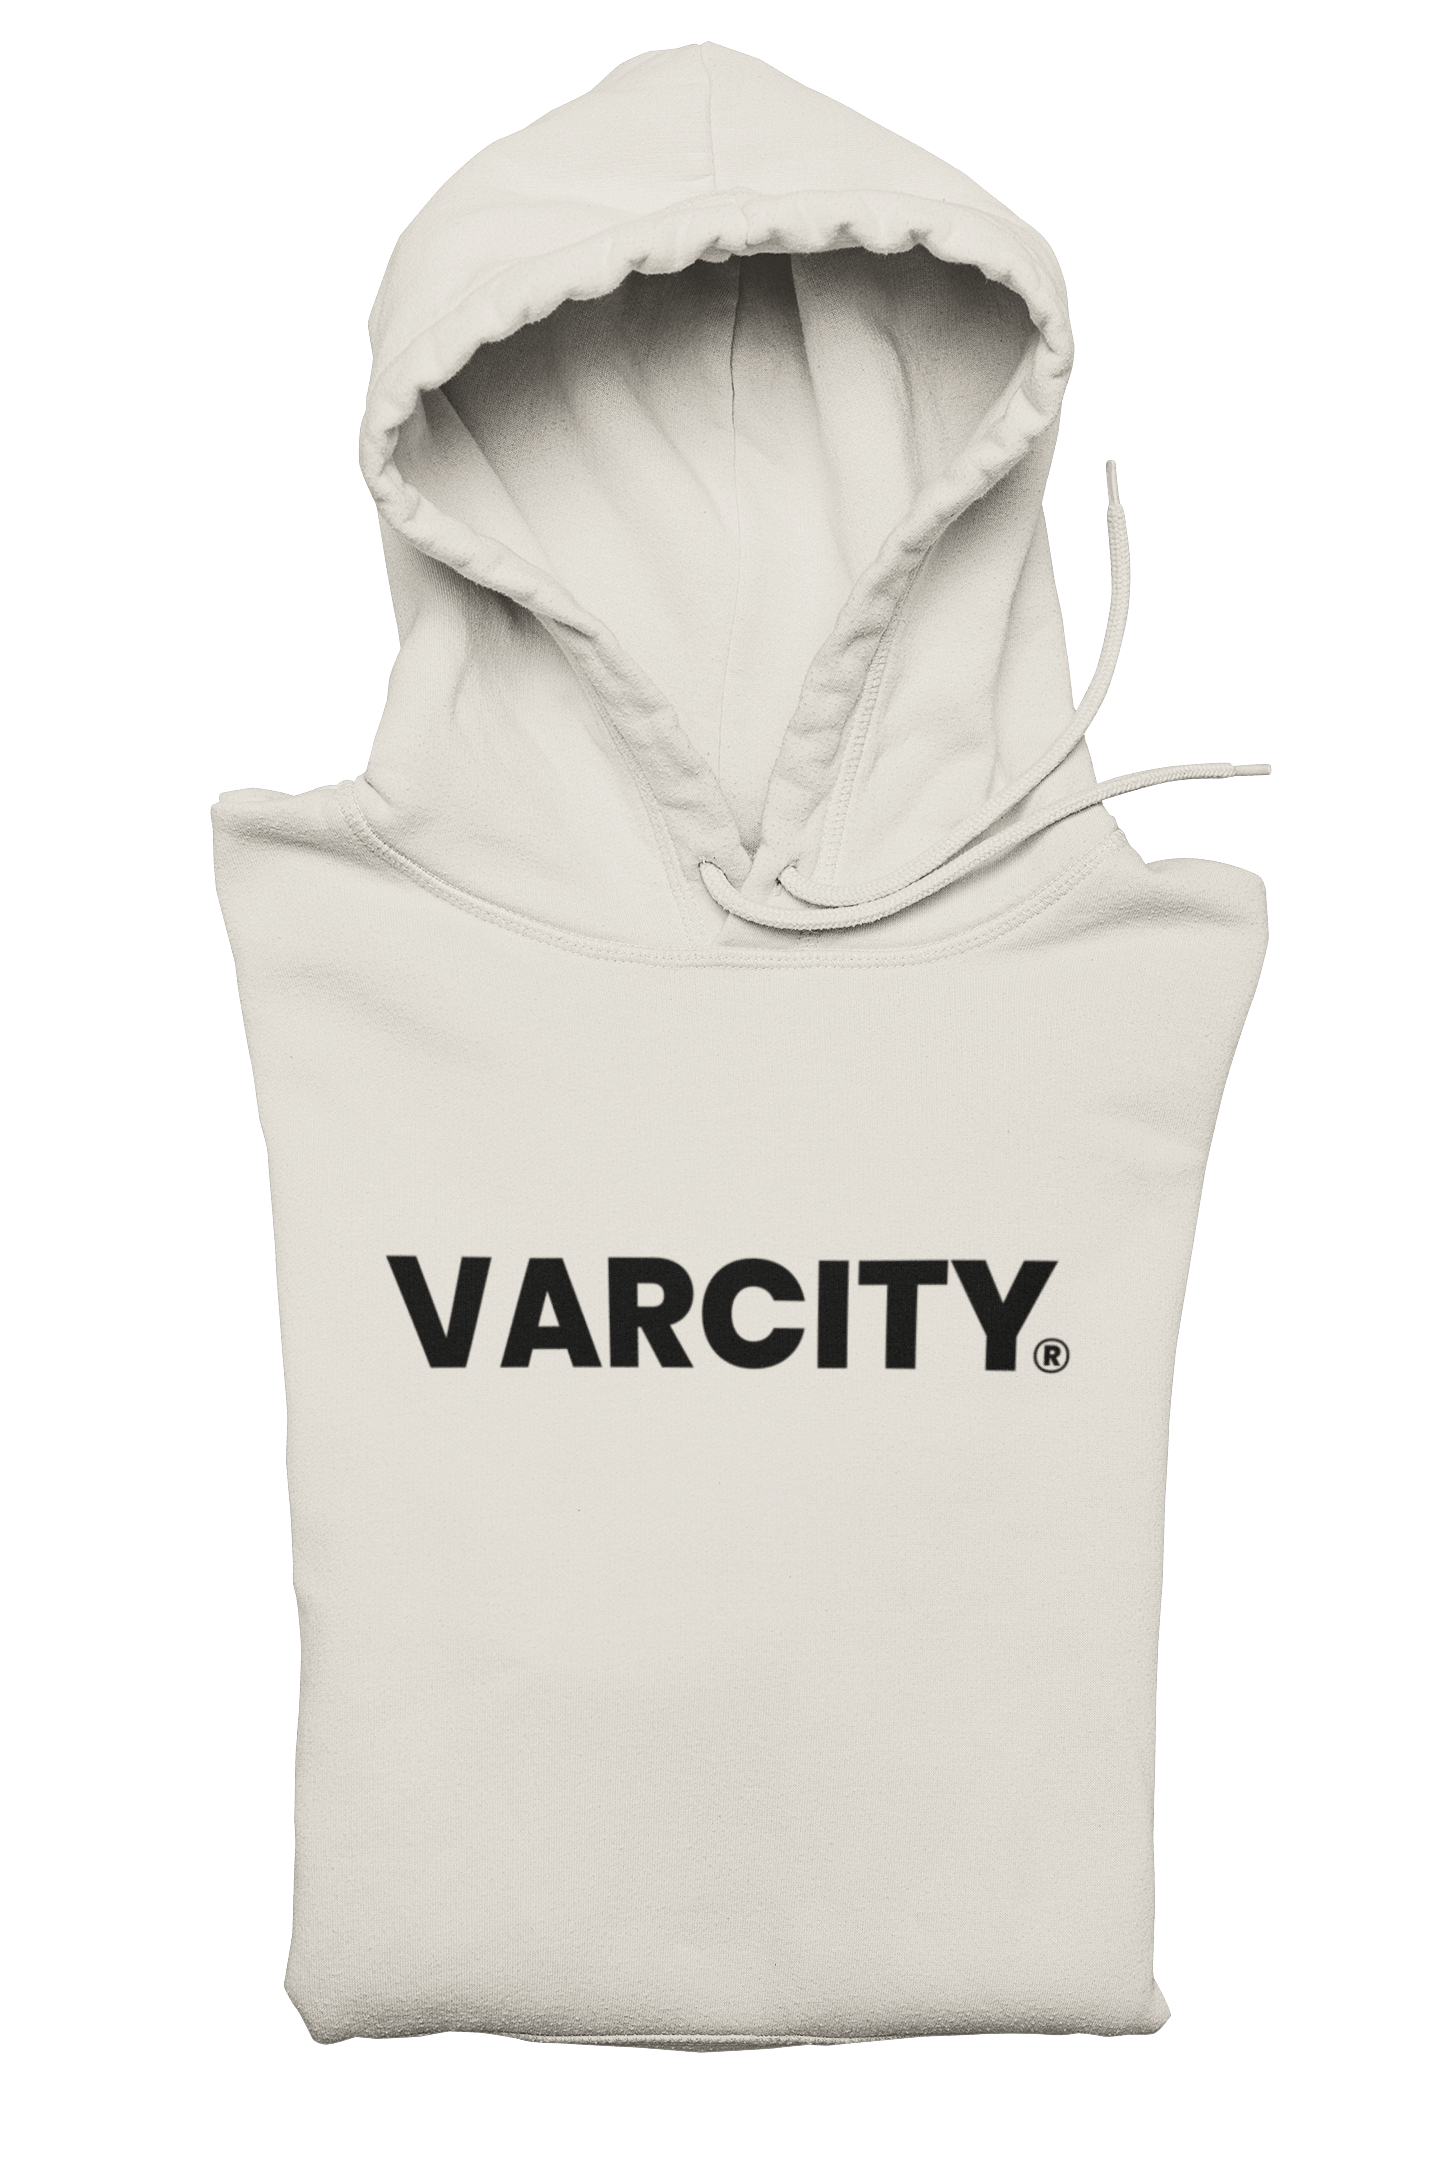 Varcity ® Fundamentals Statement Logo Hooded Sweatshirt Ivory